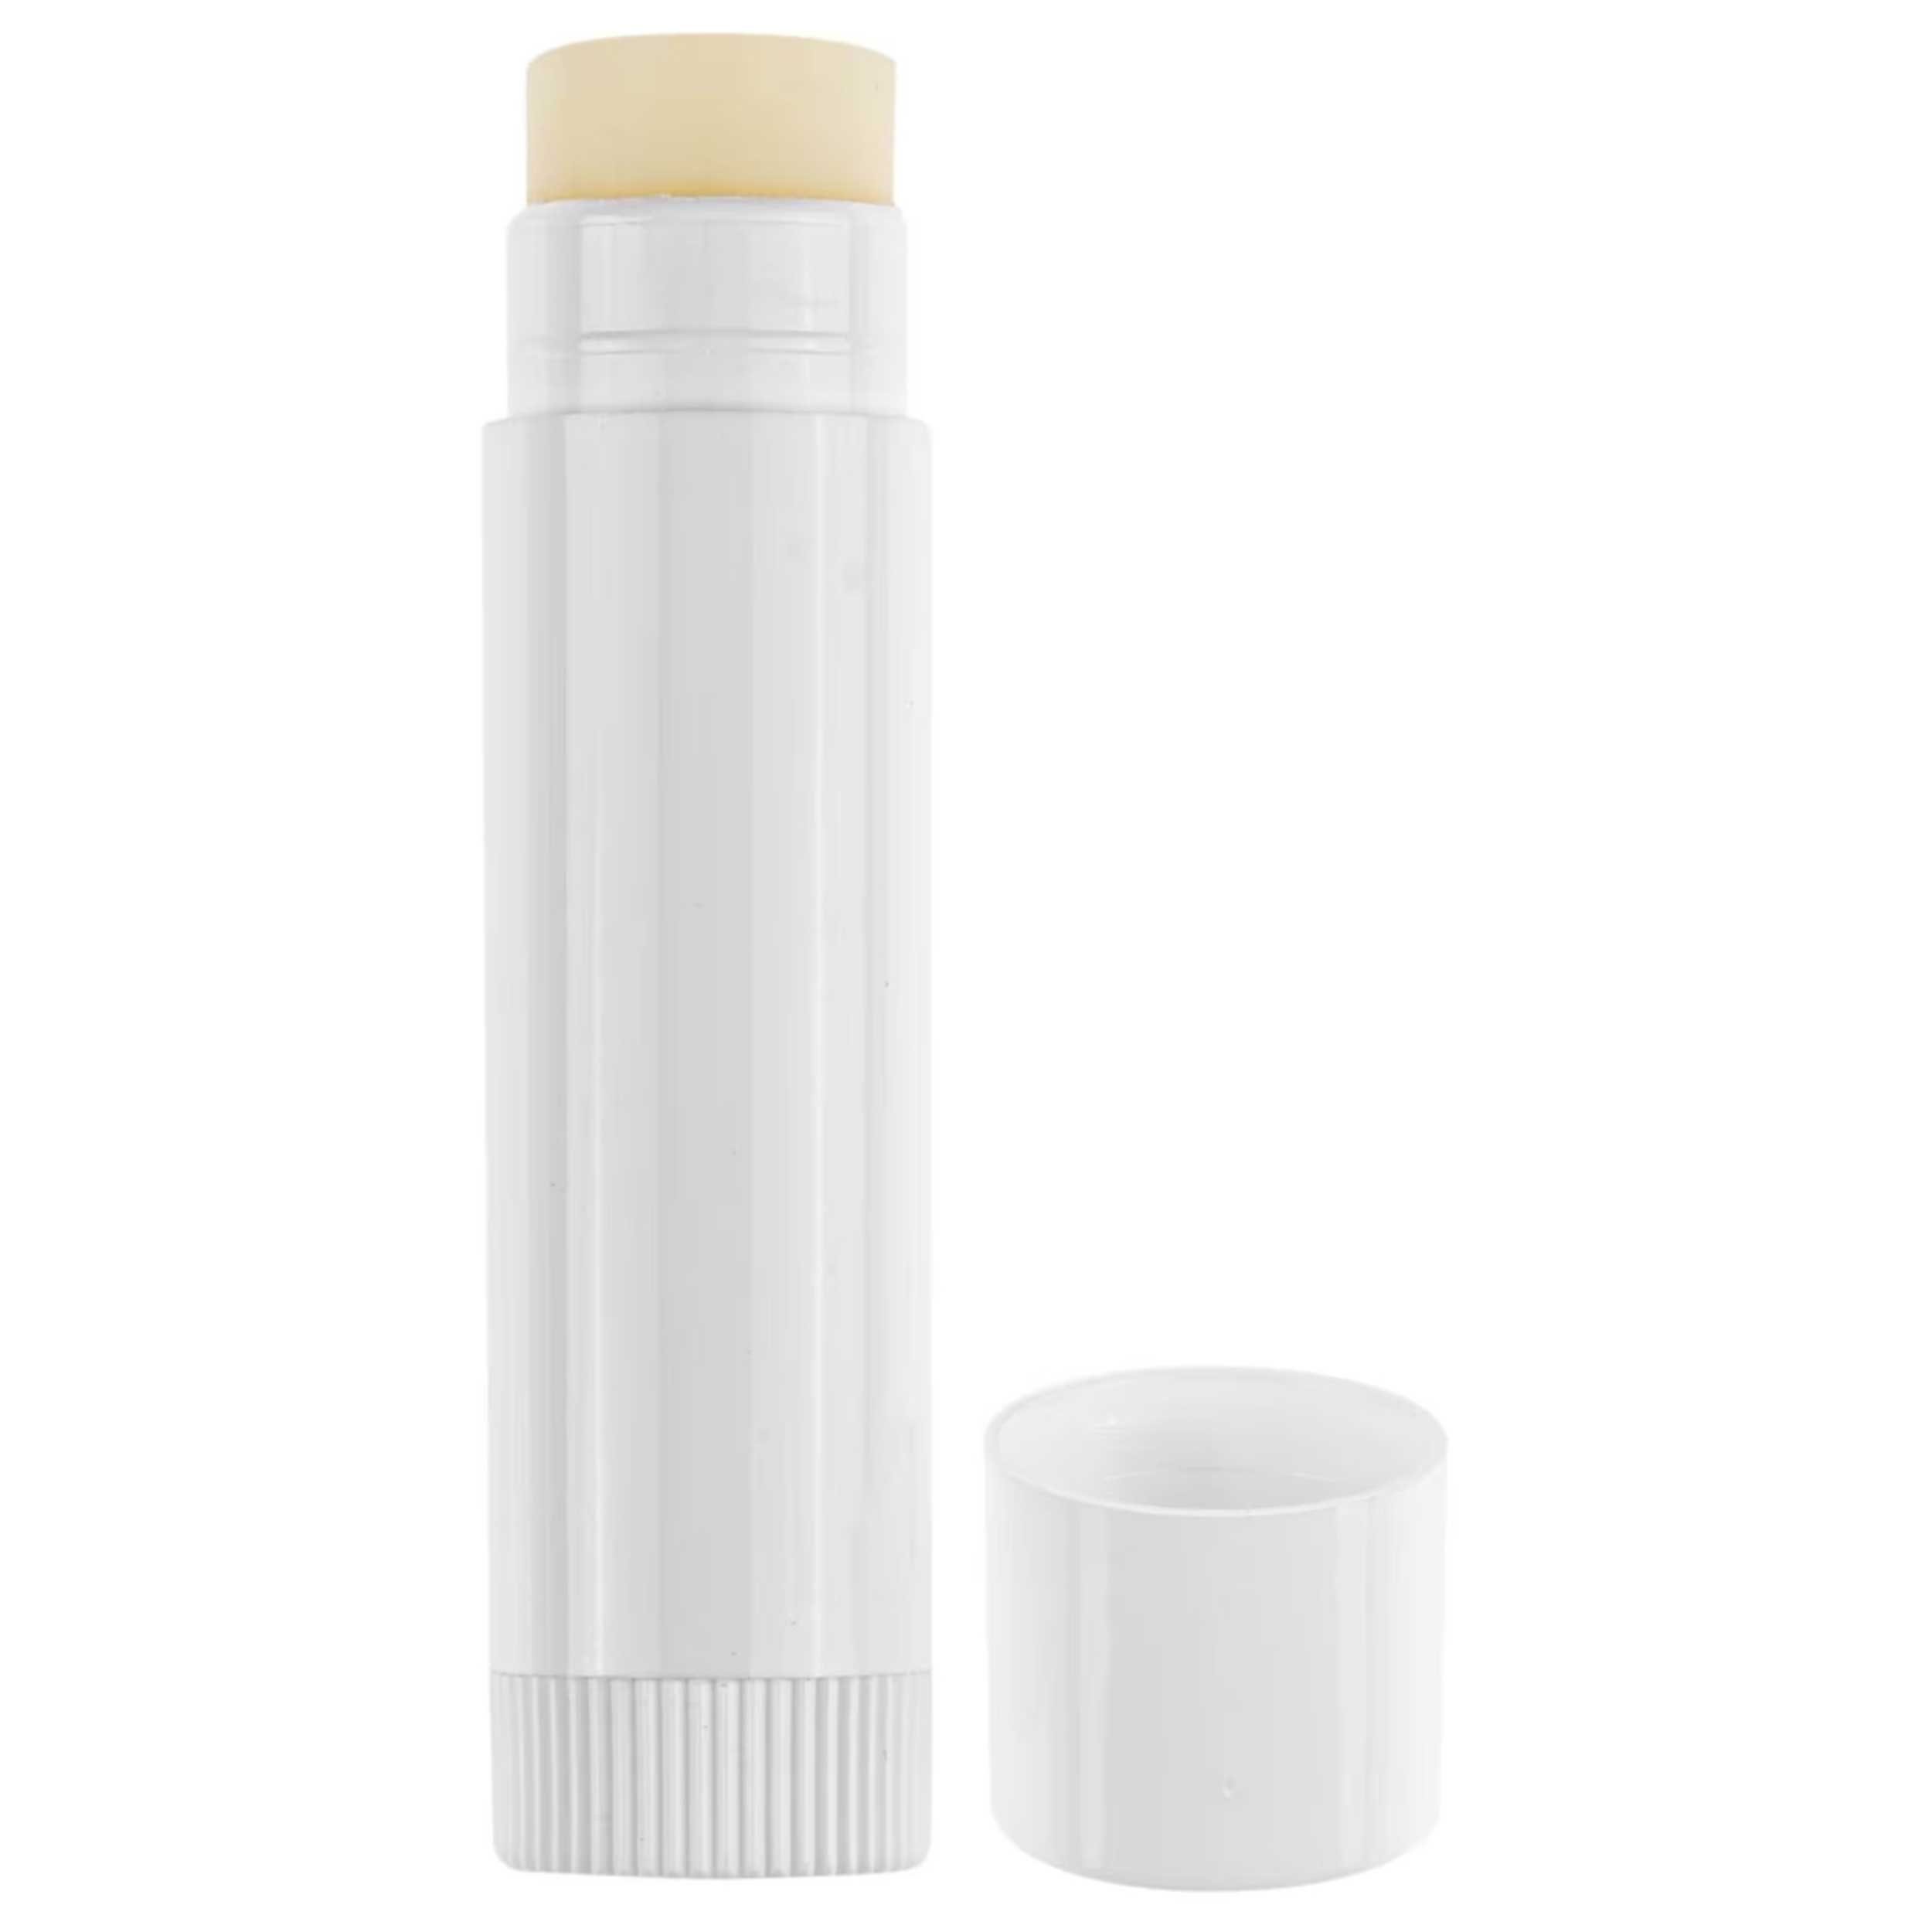 Malantis Lippenpflegemittel DIY Do-it-yourself, Füllung, Hülsen basteln machen leer ohne Drehstift Lippenpflegestift, zum leer, 50-tlg., selber Tubes